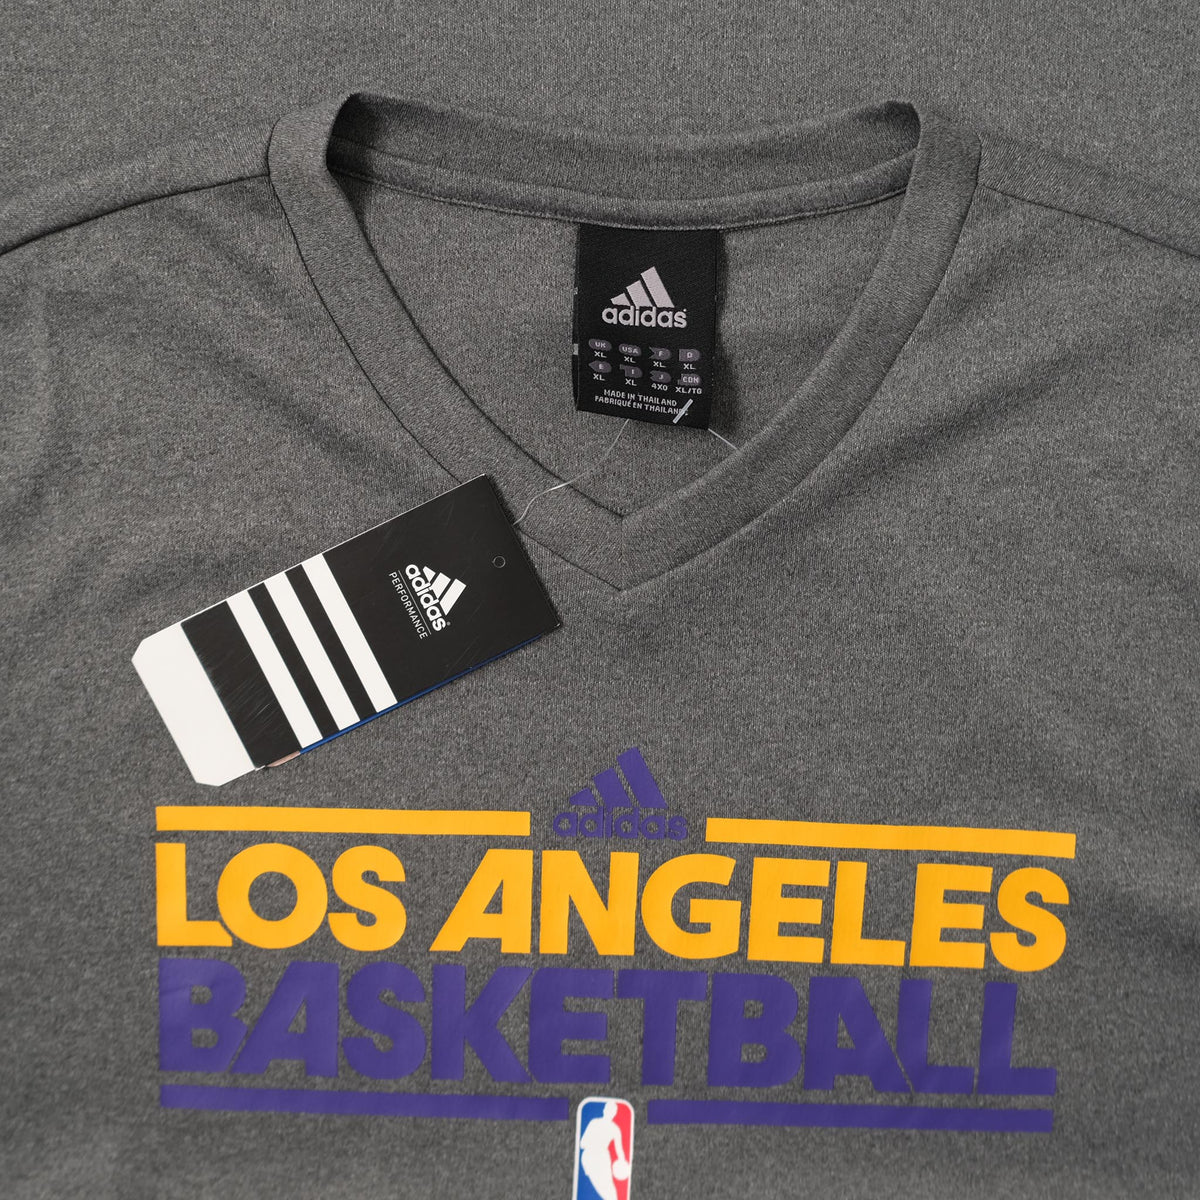 adidas, Shirts, Vintage Adidas La Lakers Tee